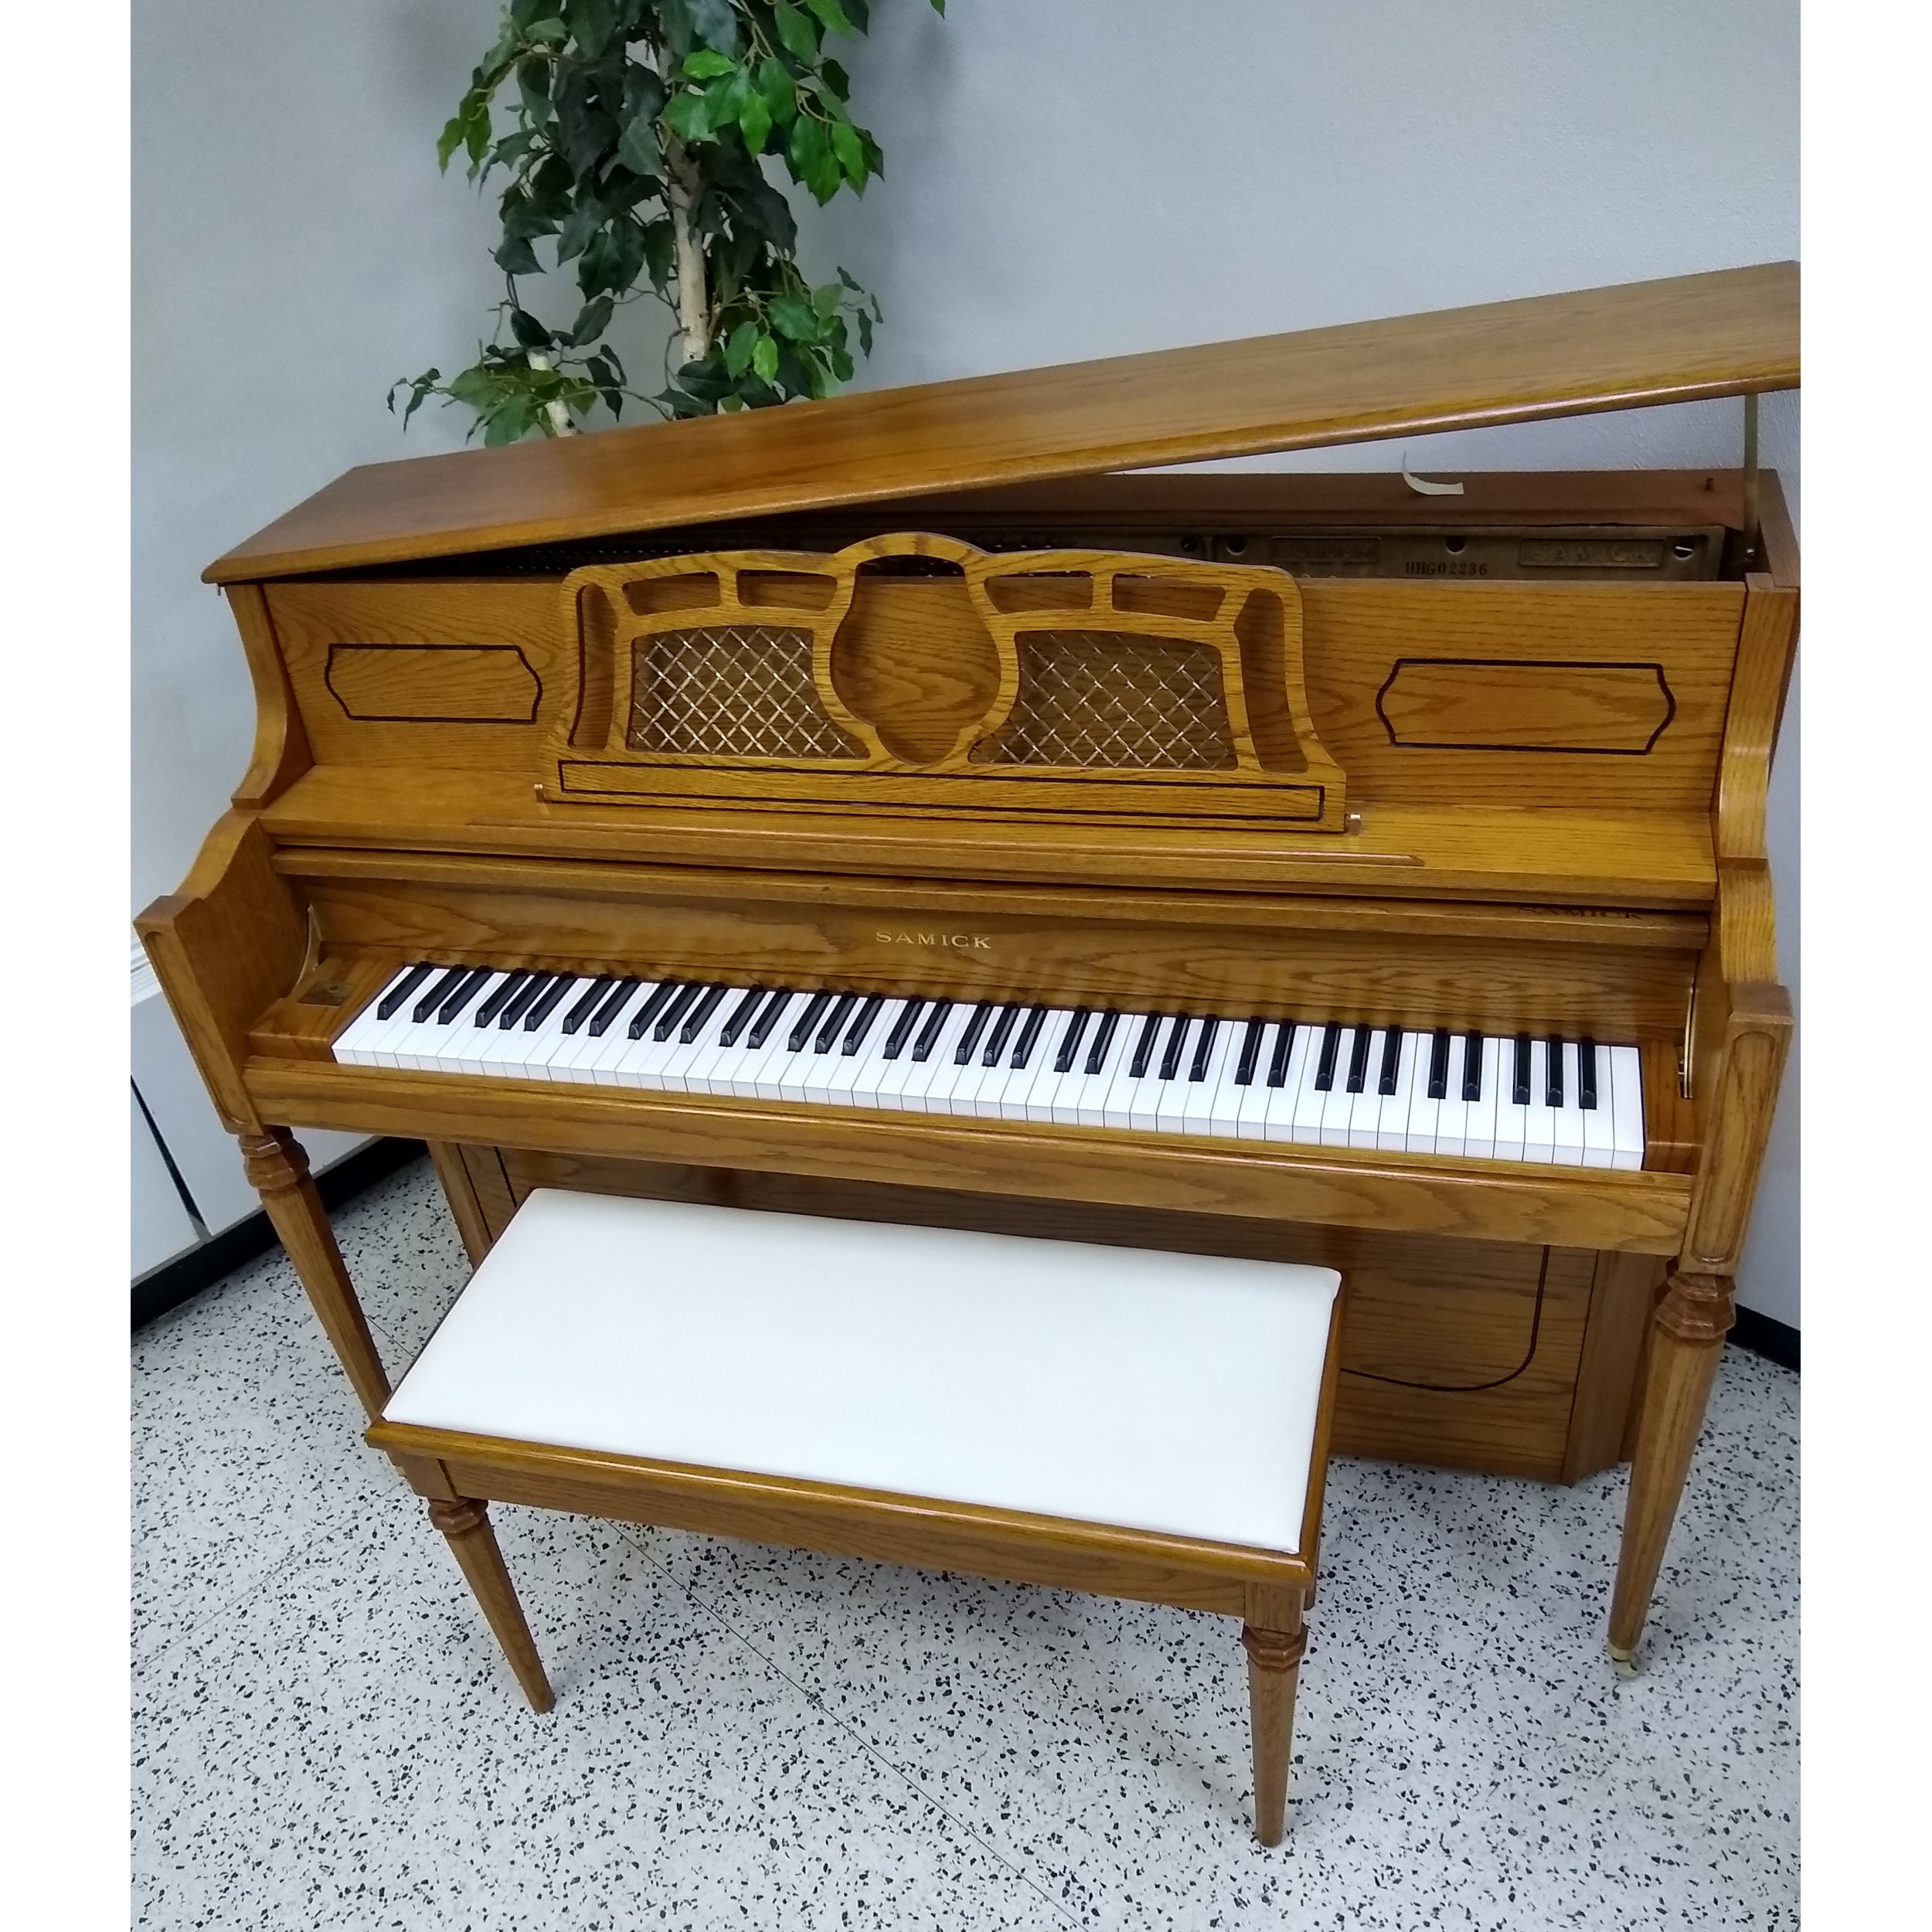 Samick Professional Upright Piano